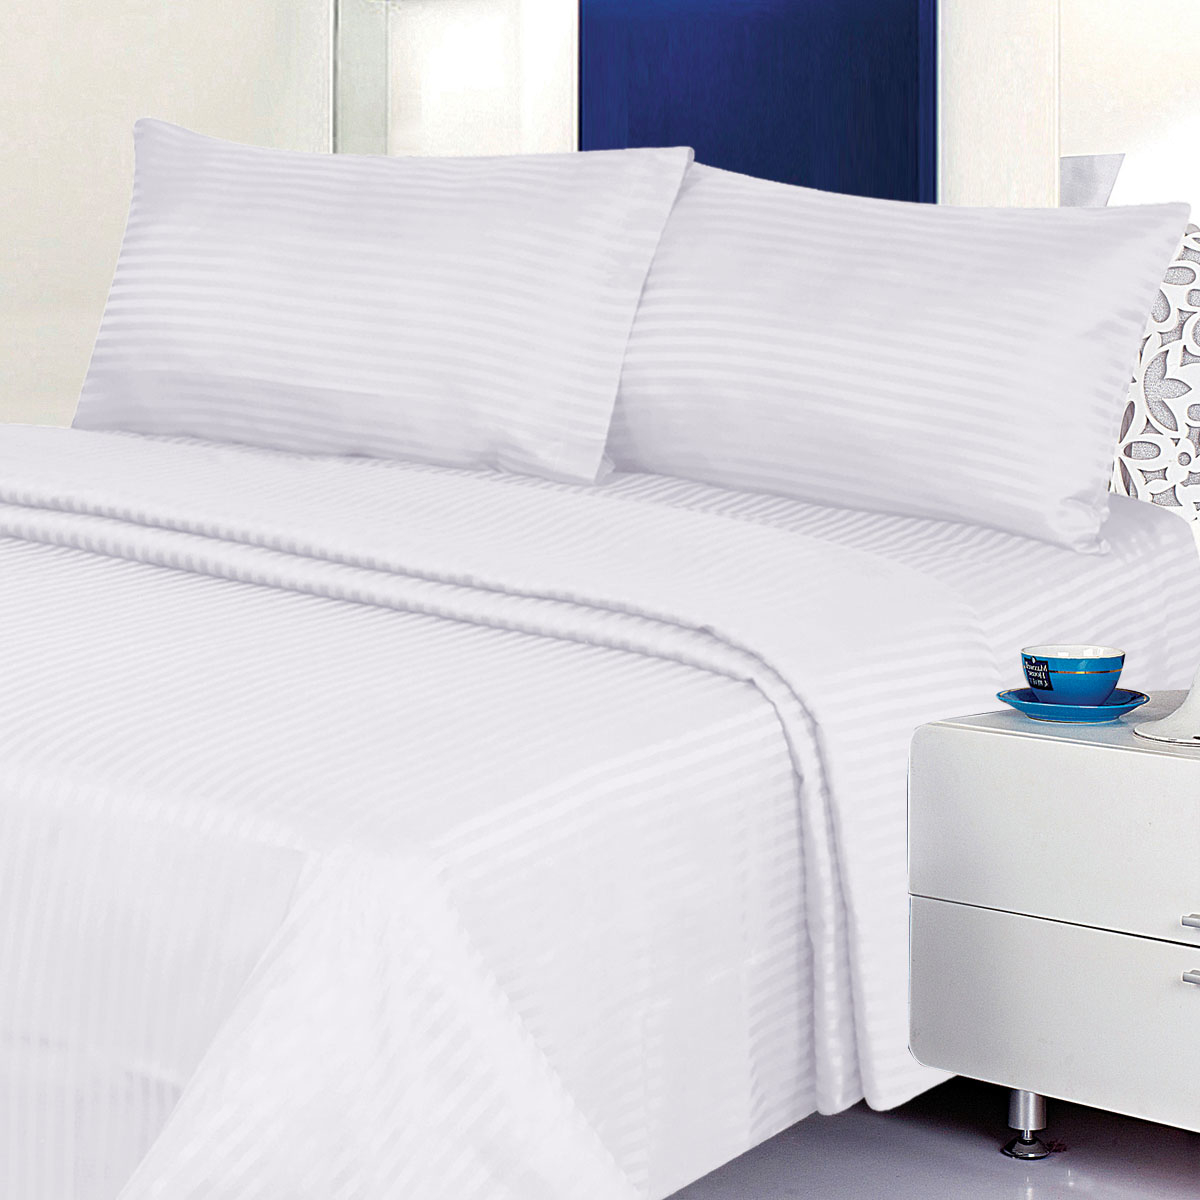 Deluxe 6PC Classic Cotton-Blend Sateen Dobby Stripe Bed Sheet Set - Queen, Light Blue